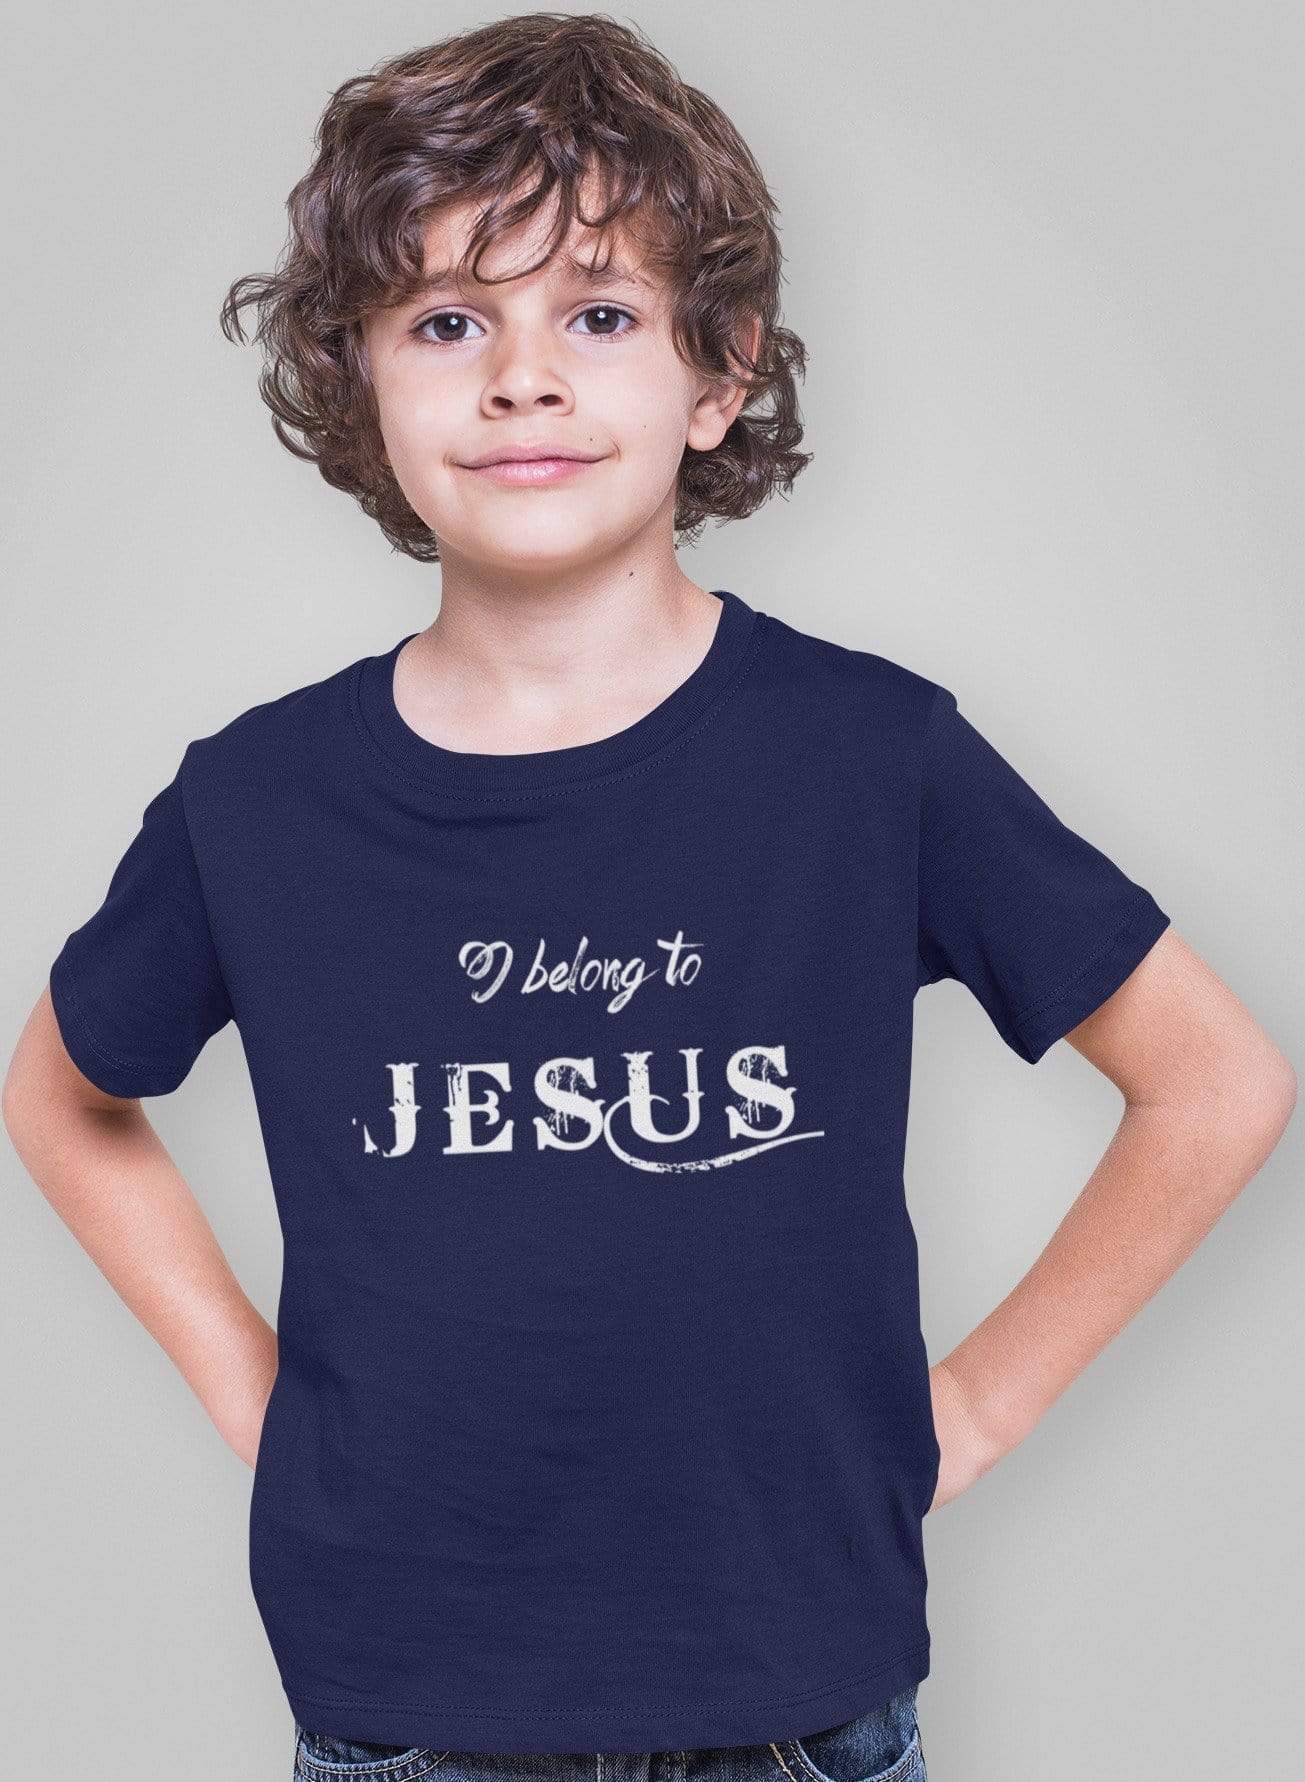 Living Words Kids Round Neck T Shirt Boy / 0-12 Mn / Navy Blue I belong to Jesus